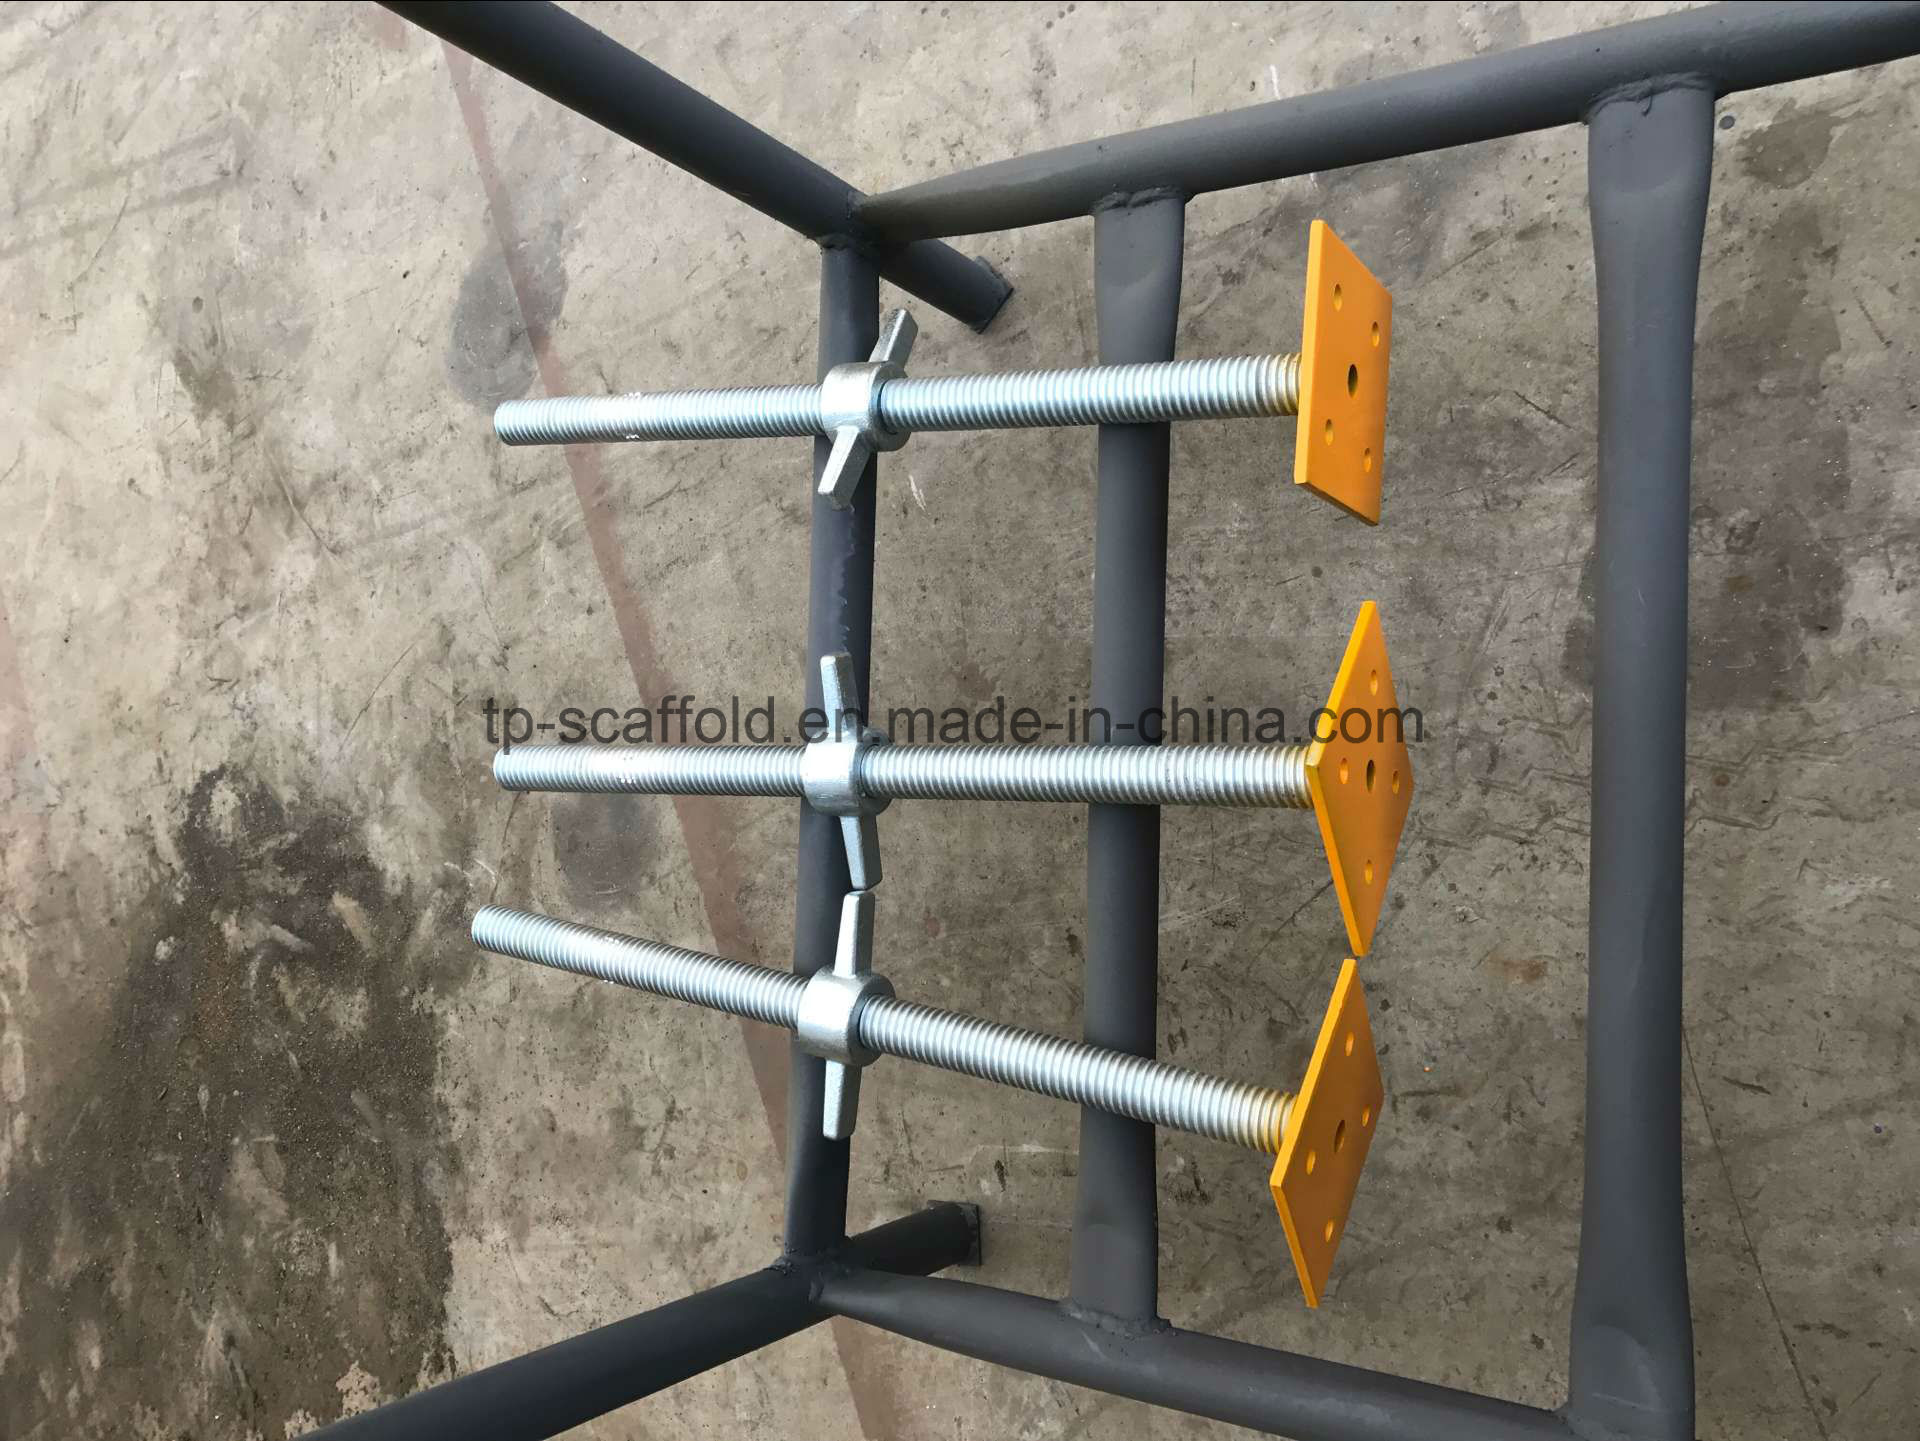 Scaffolding Construction Adjustable Screw Jack Base for Scaffold Frame